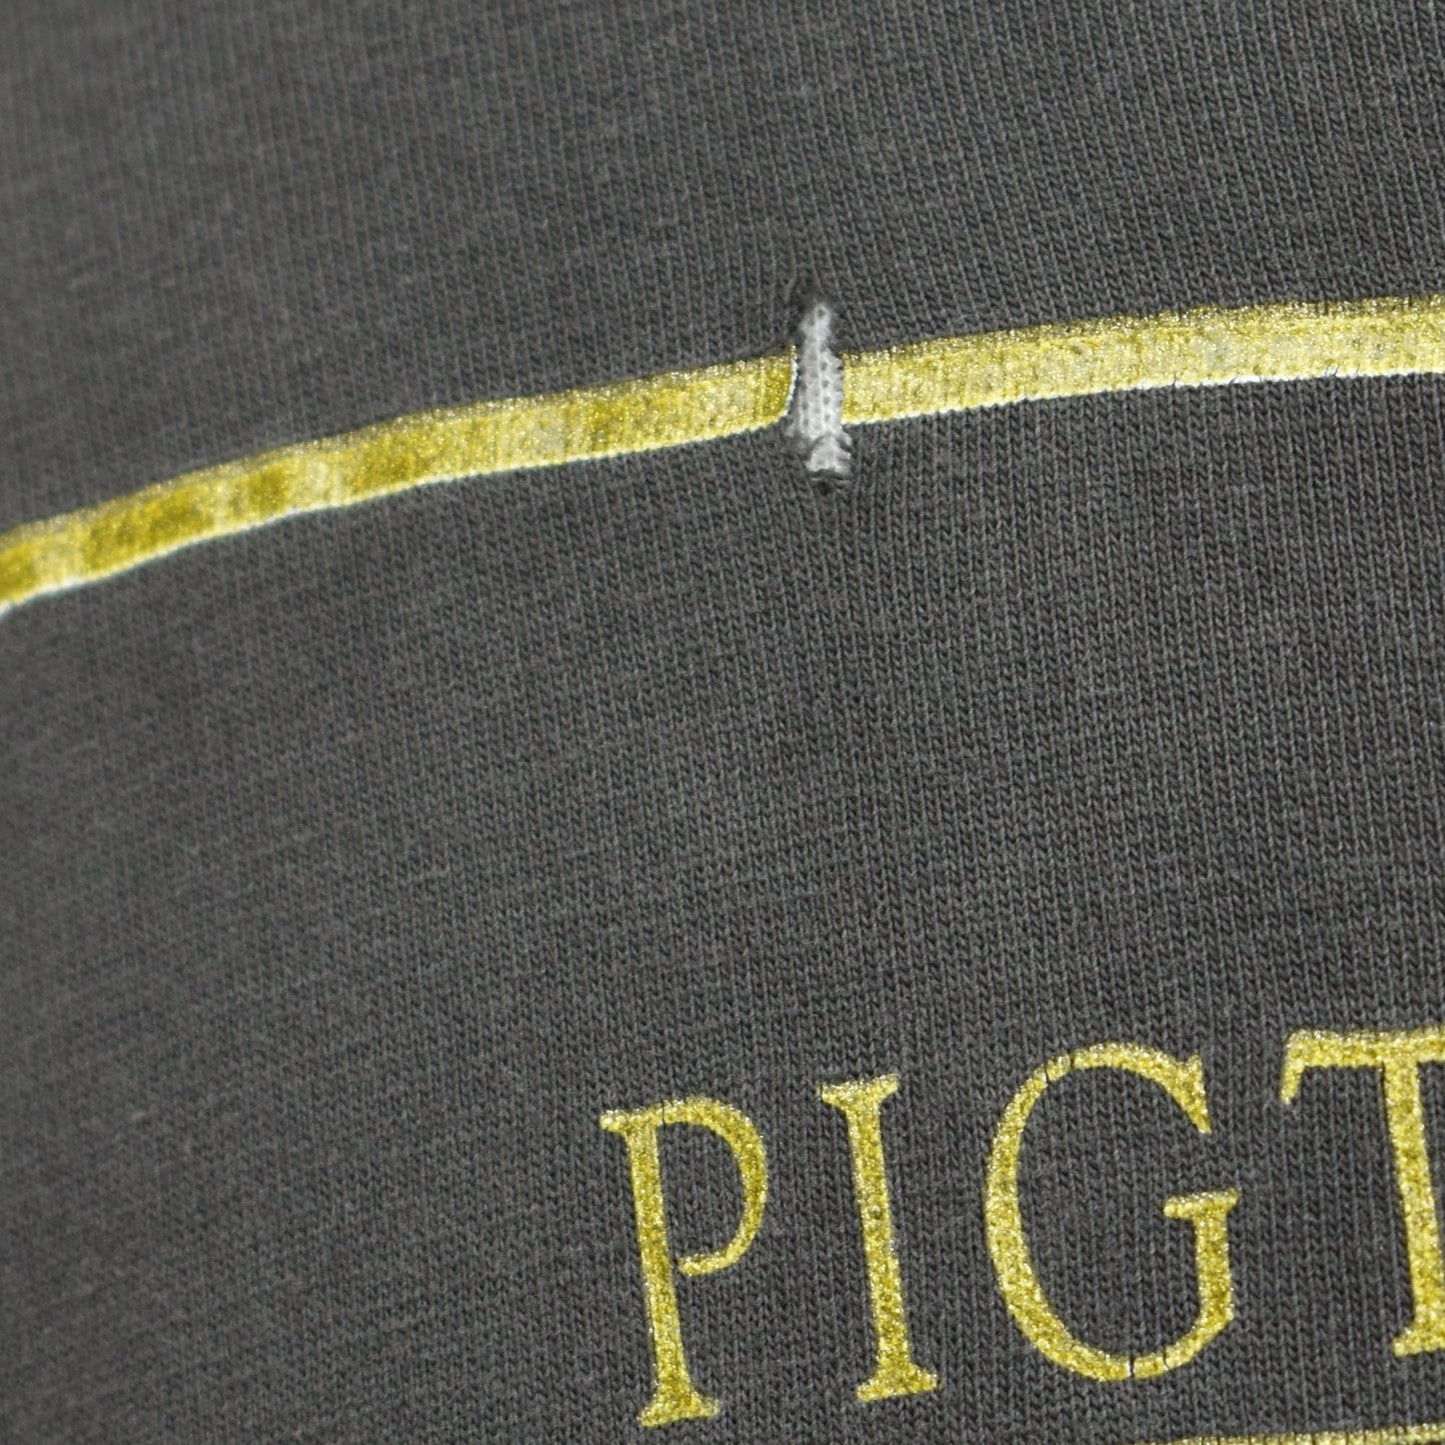 Vintage 90s Pigtoria's Secret Miss Piggy Jim Henson Parody Single Stitch T-shirt